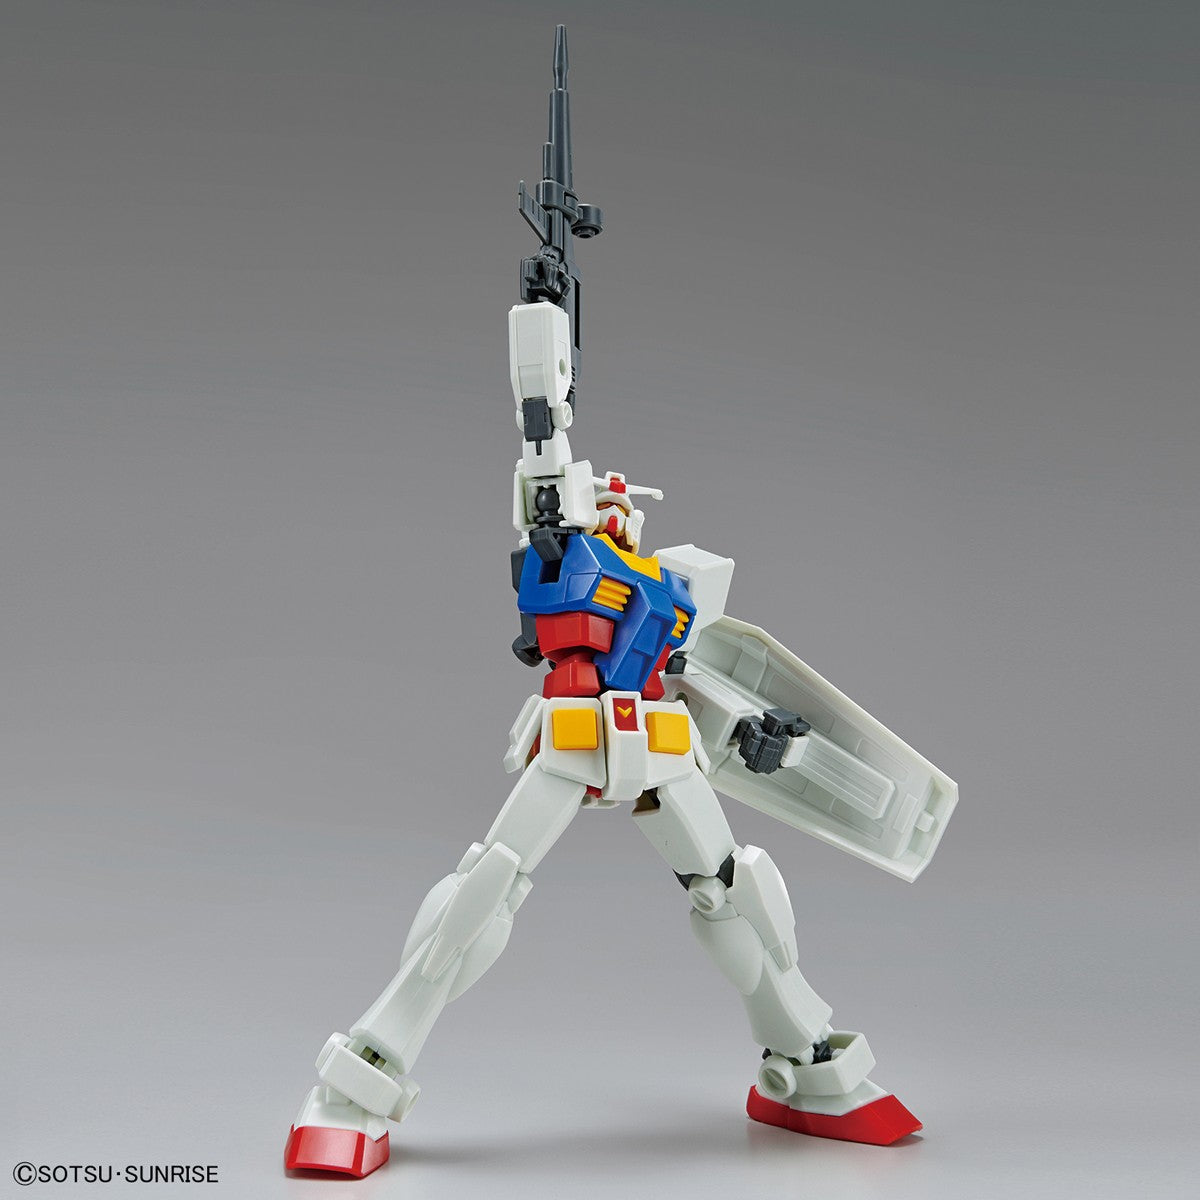 Rx-78-2 Gundam (61064)